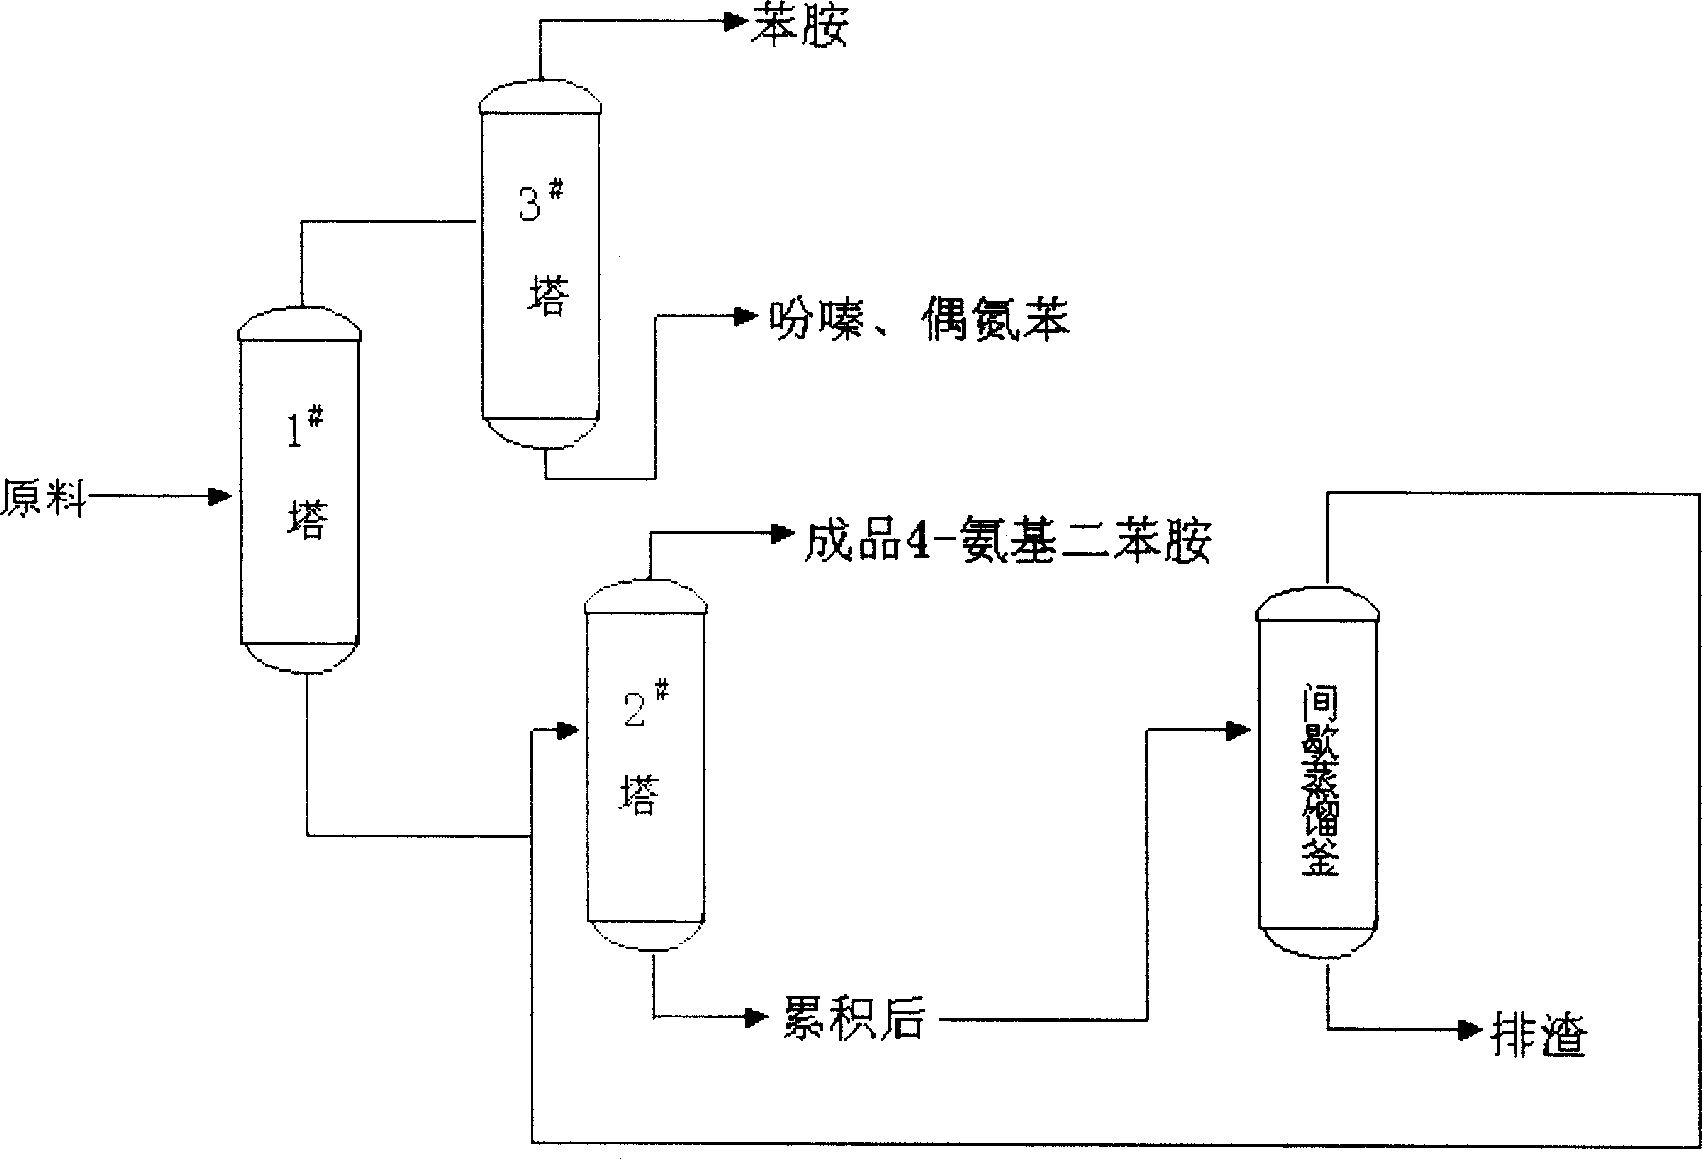 Process for preparing 4-amino diphenylamine